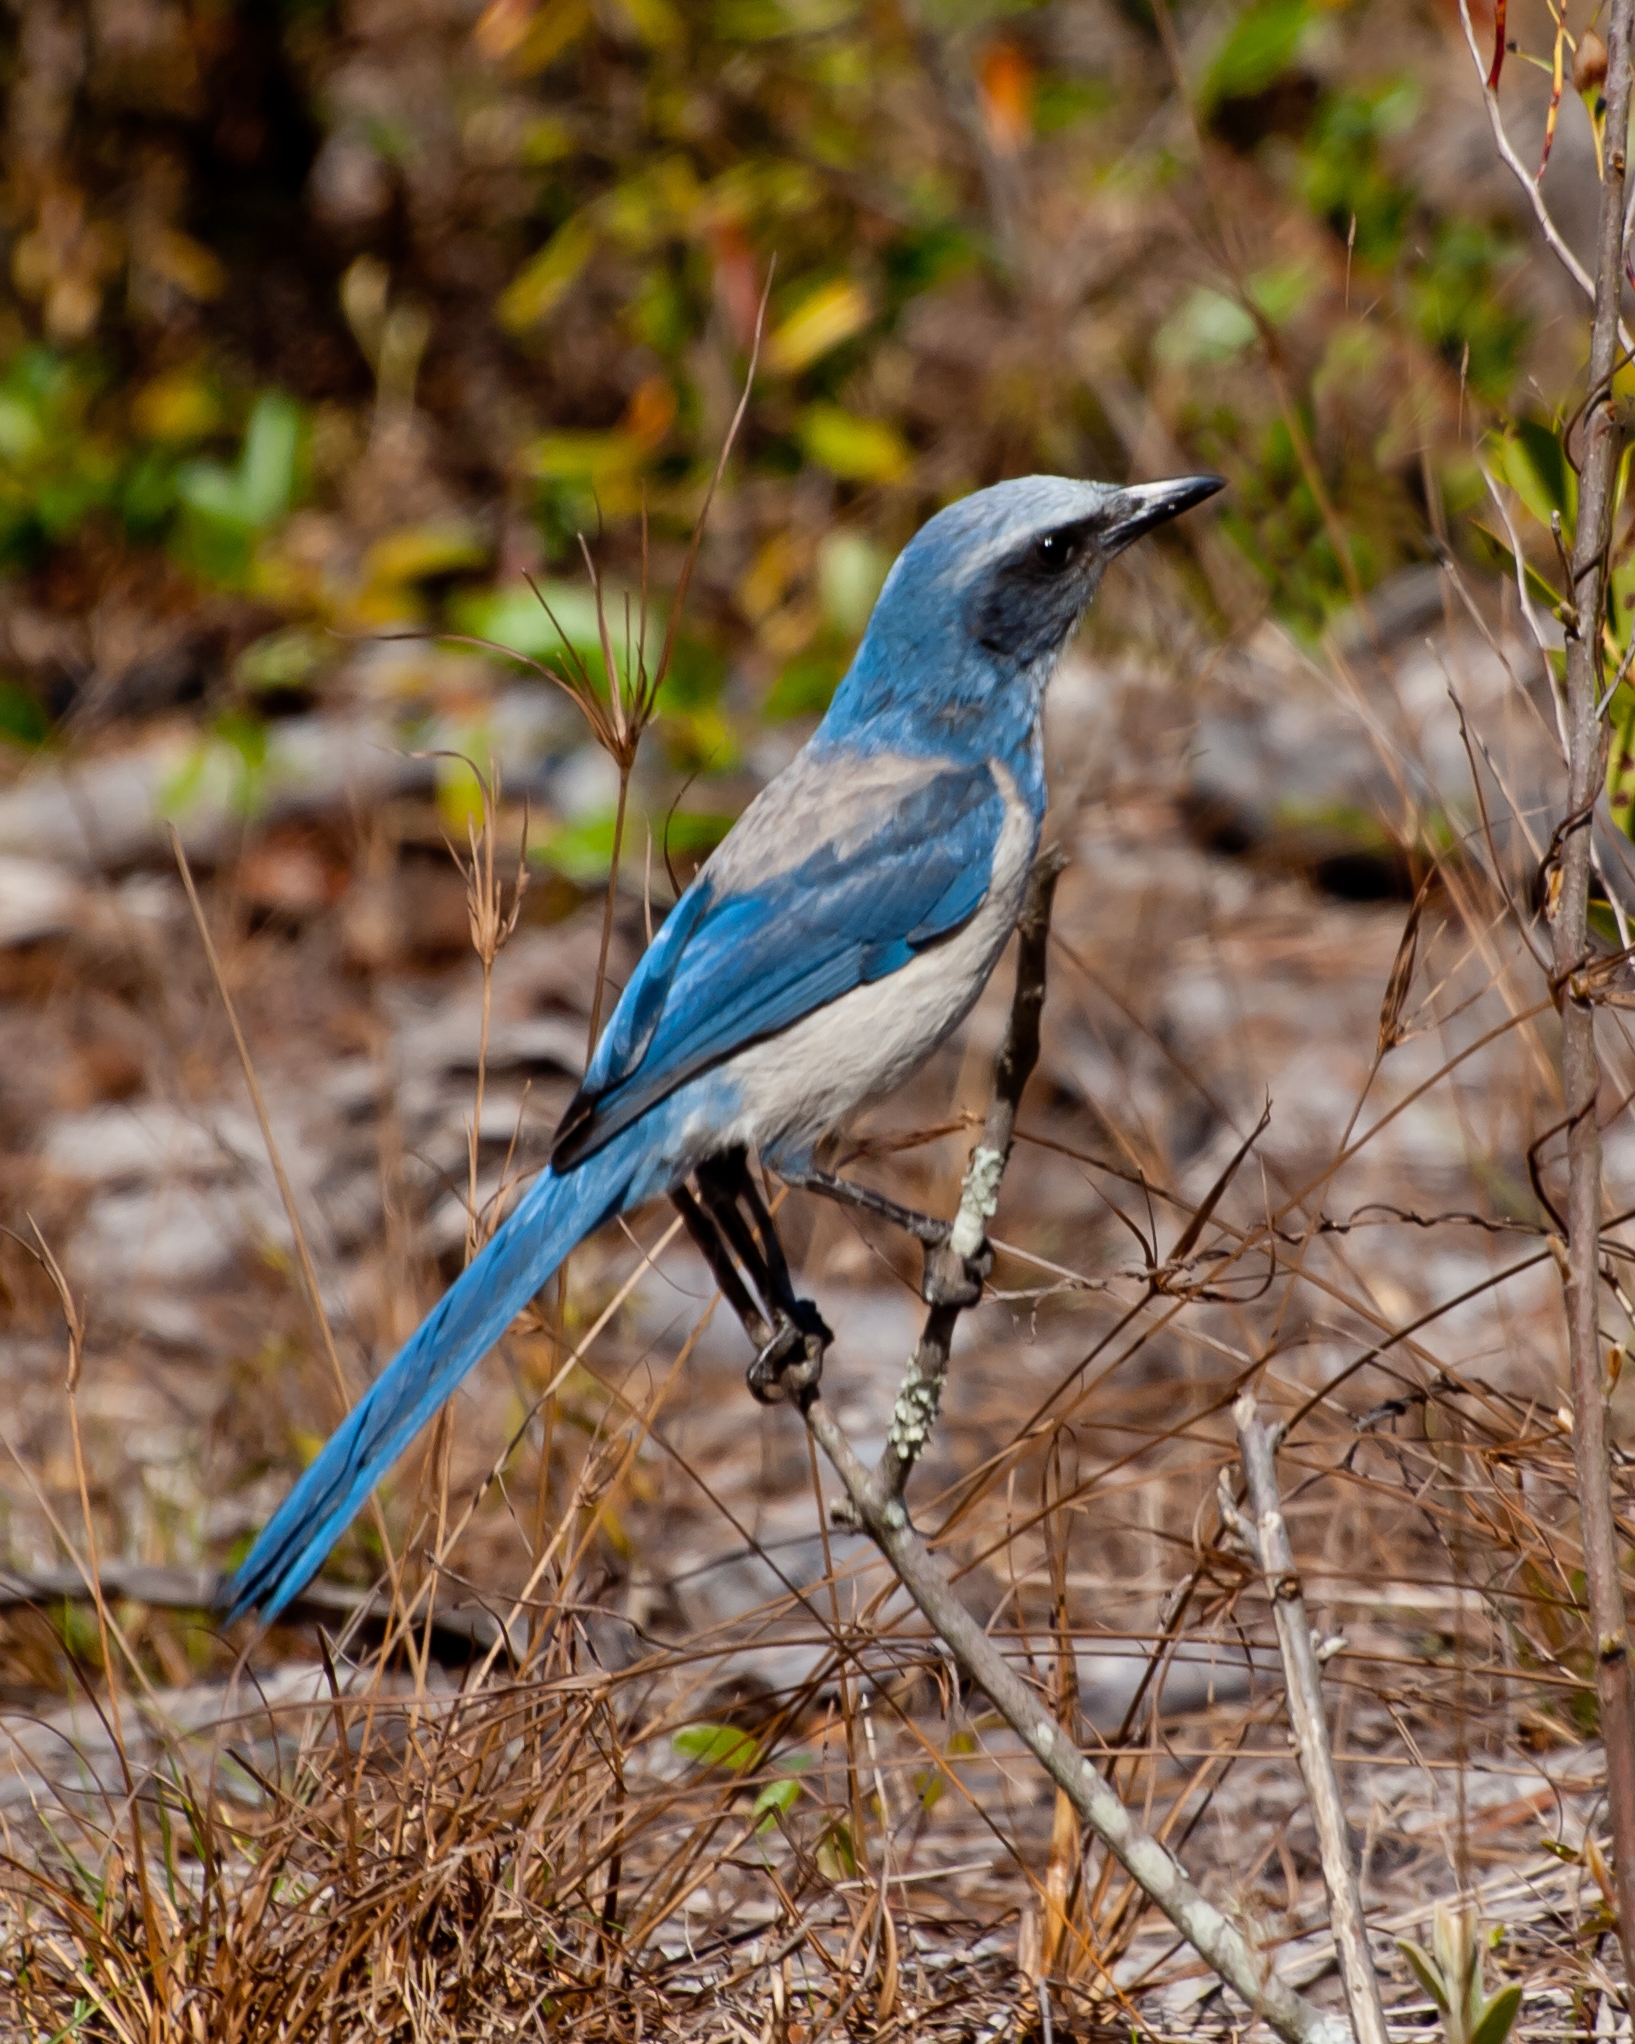 A view of a blue Florida Scrub Jay.